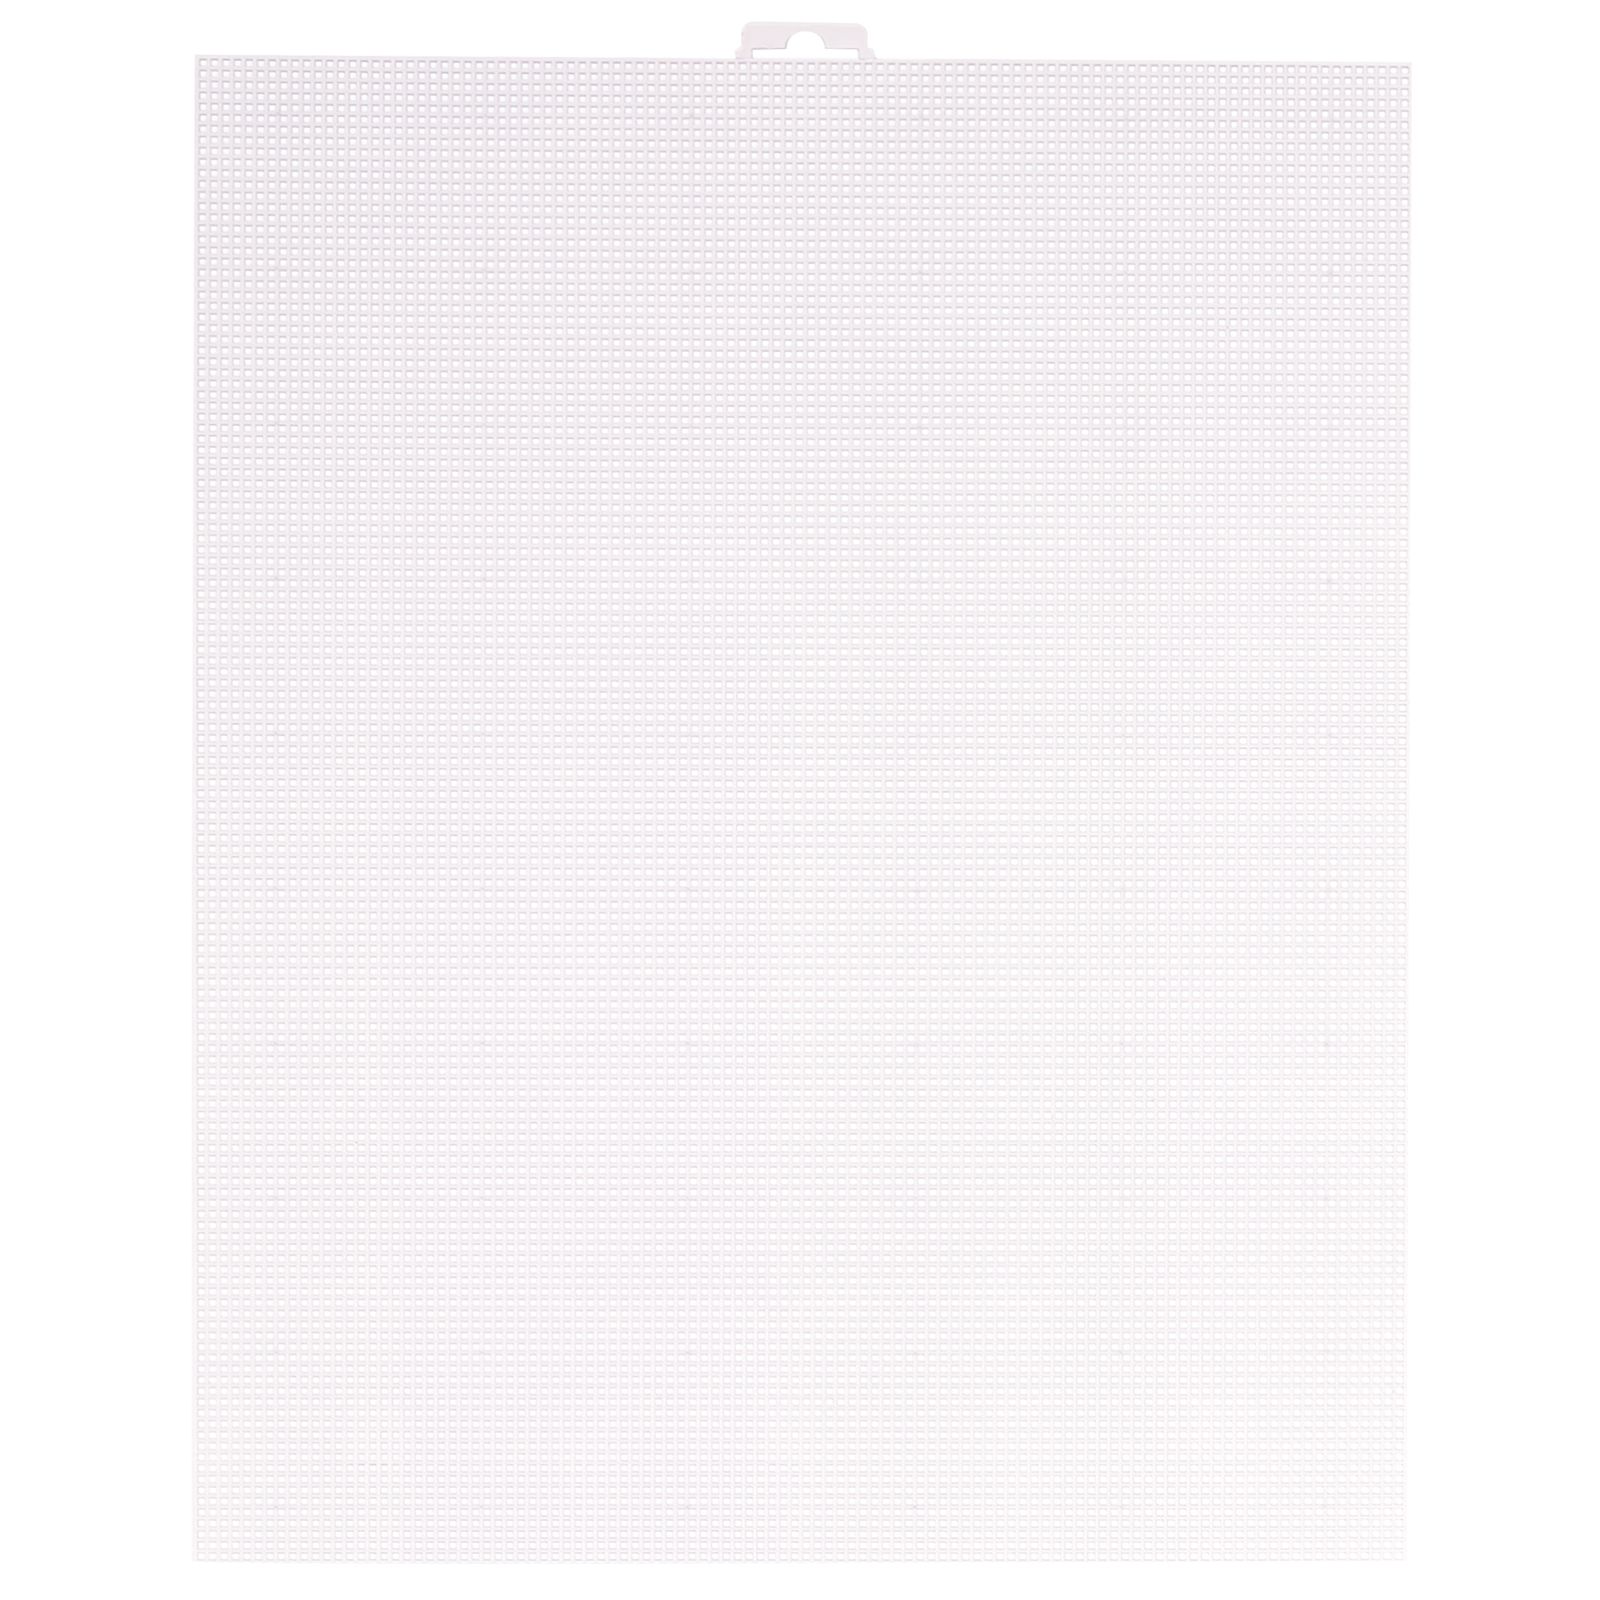 Vaessen Creative • Plastic Canvas 10.2x12.6in 10count Clear 10pcs